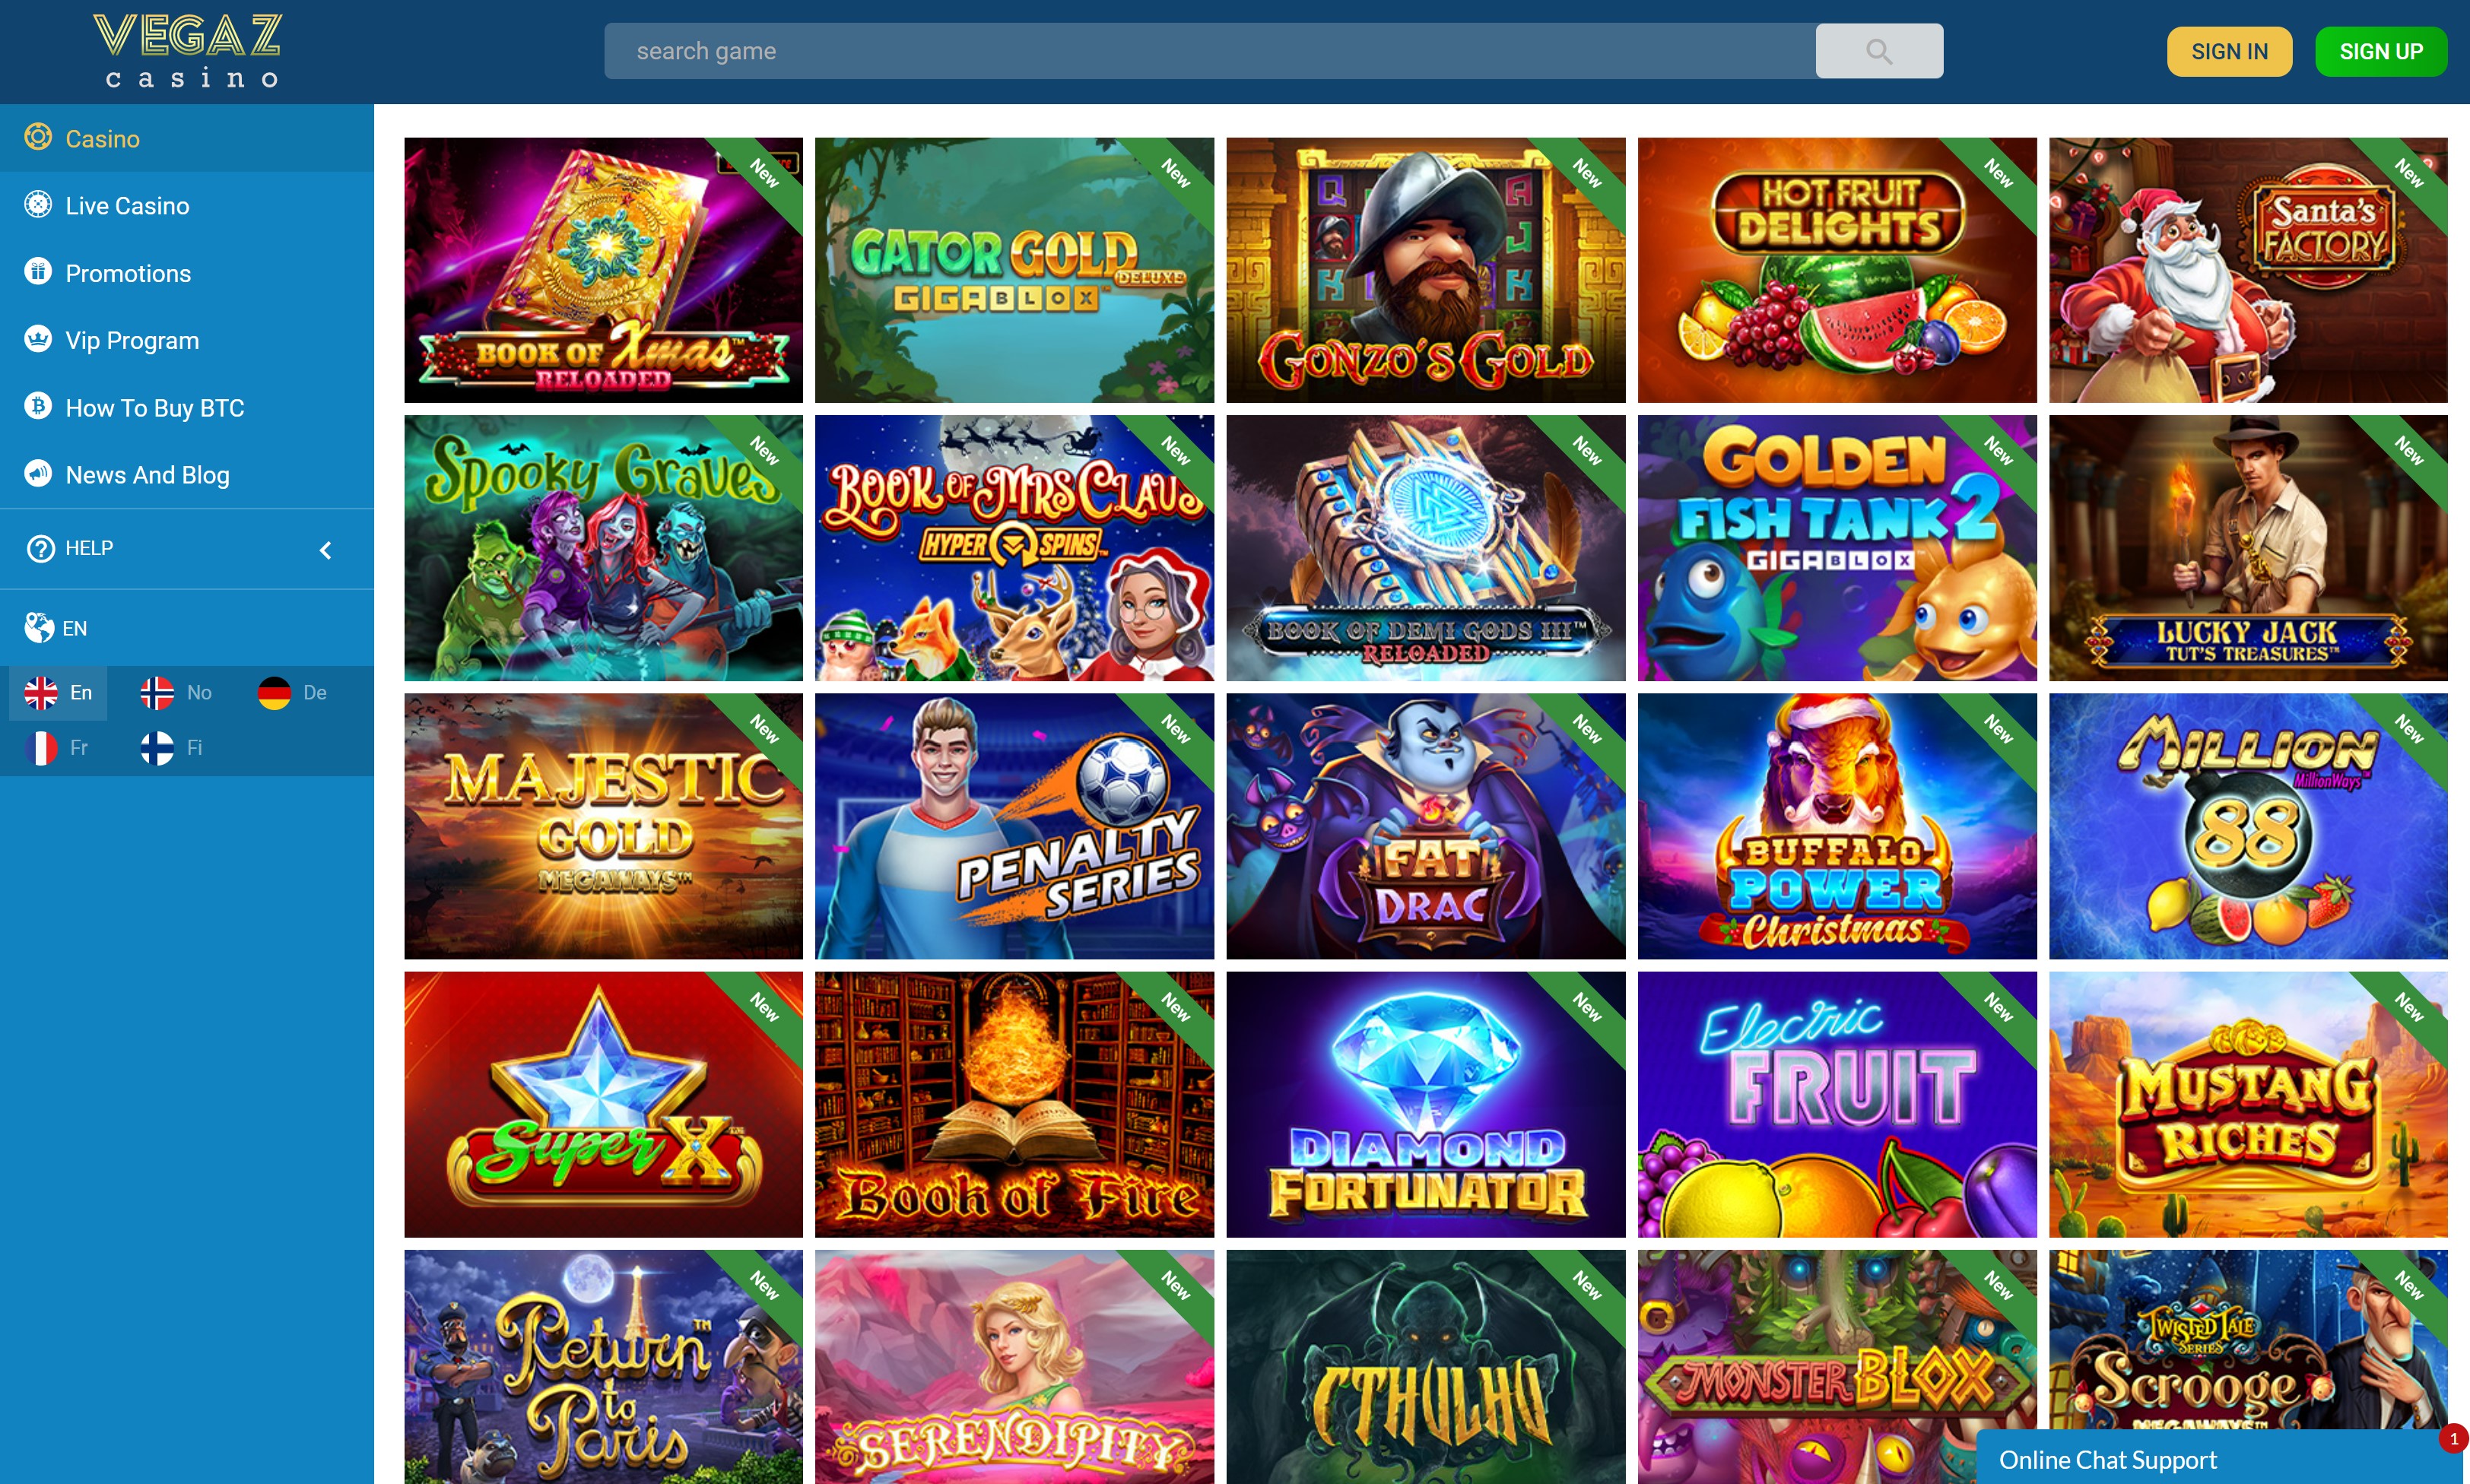 vegaz casino slot games - golden fish tank 2 gonzo's gold book of fire